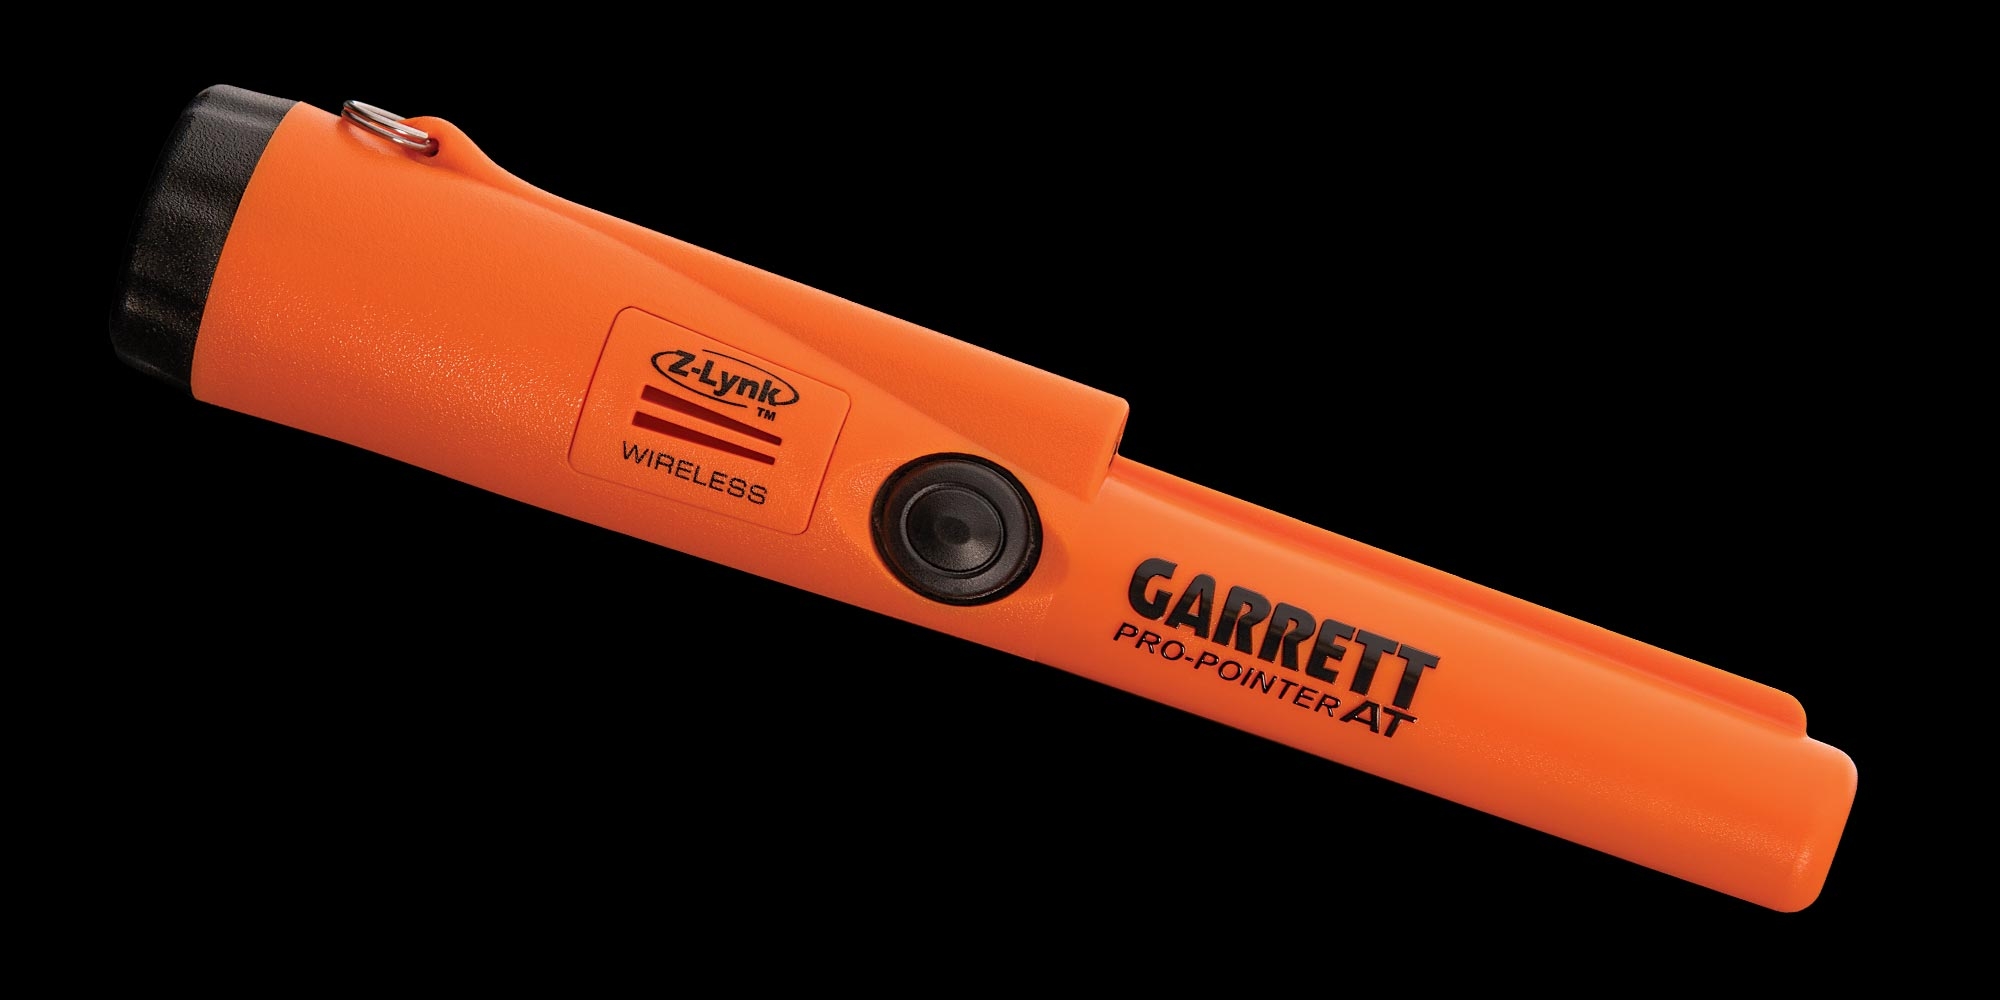 GARRETT PRO POINTER STAINLESS STEEL ATTACHMENT SECURITY RING